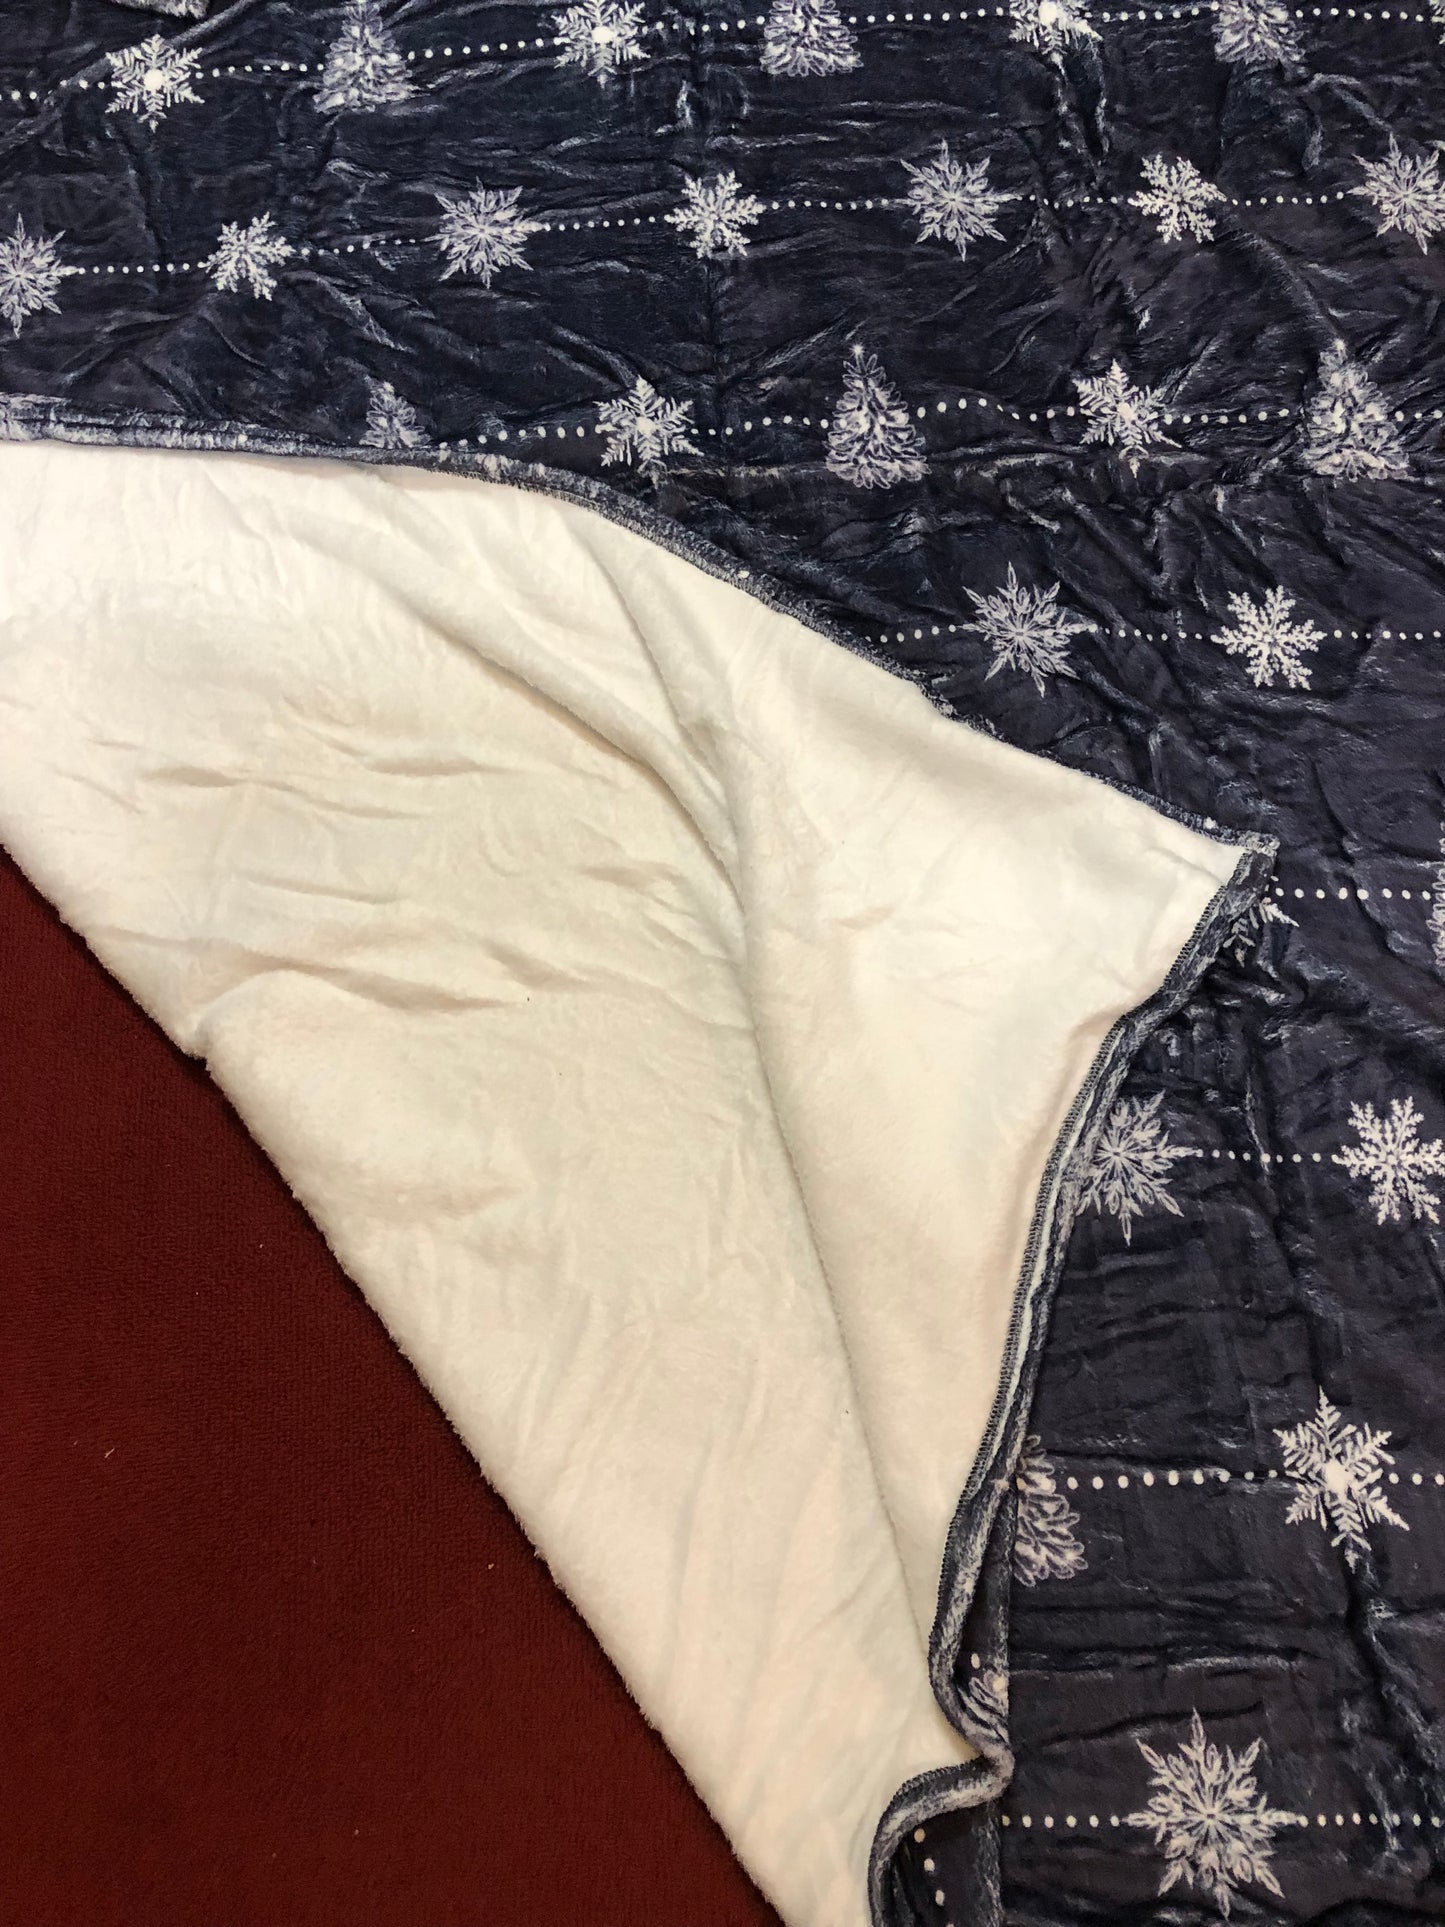 Christmas Throw Blanket Multi/Blue Snow Flakes Design Size 80X60 New Arrival